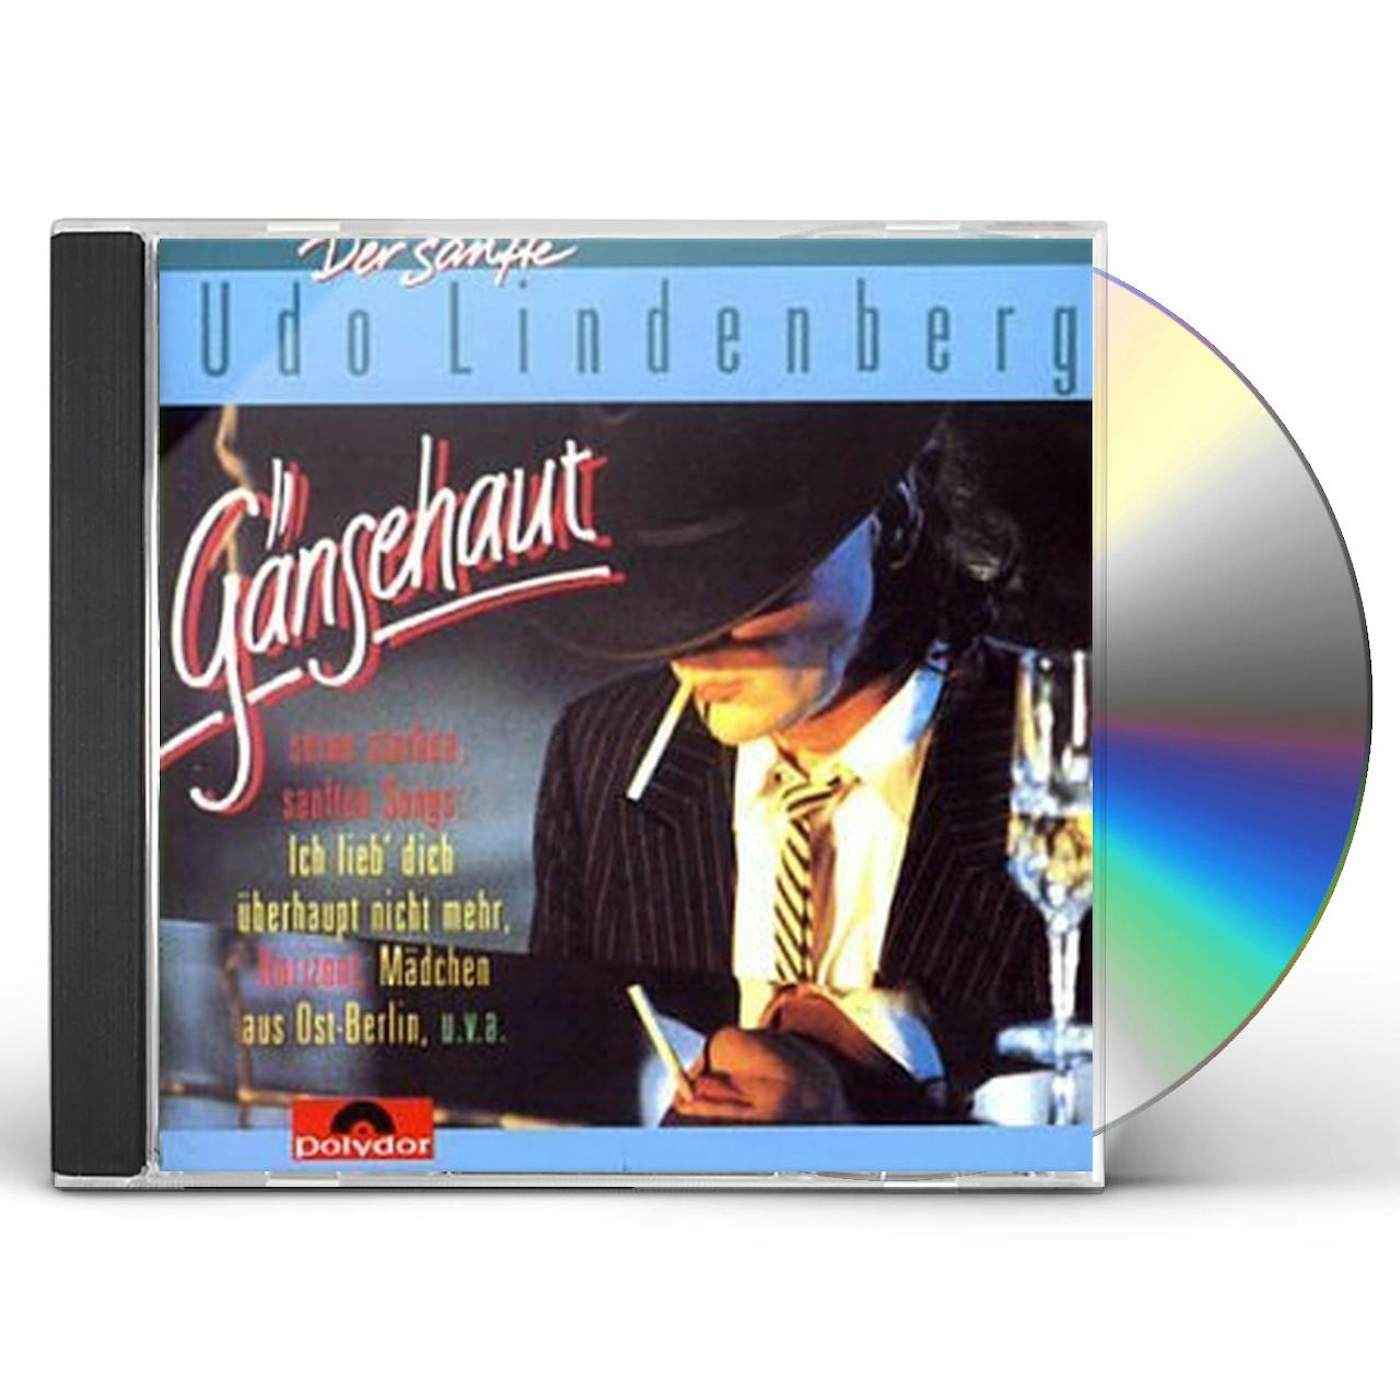 Udo Lindenberg GAENSEHAUT CD